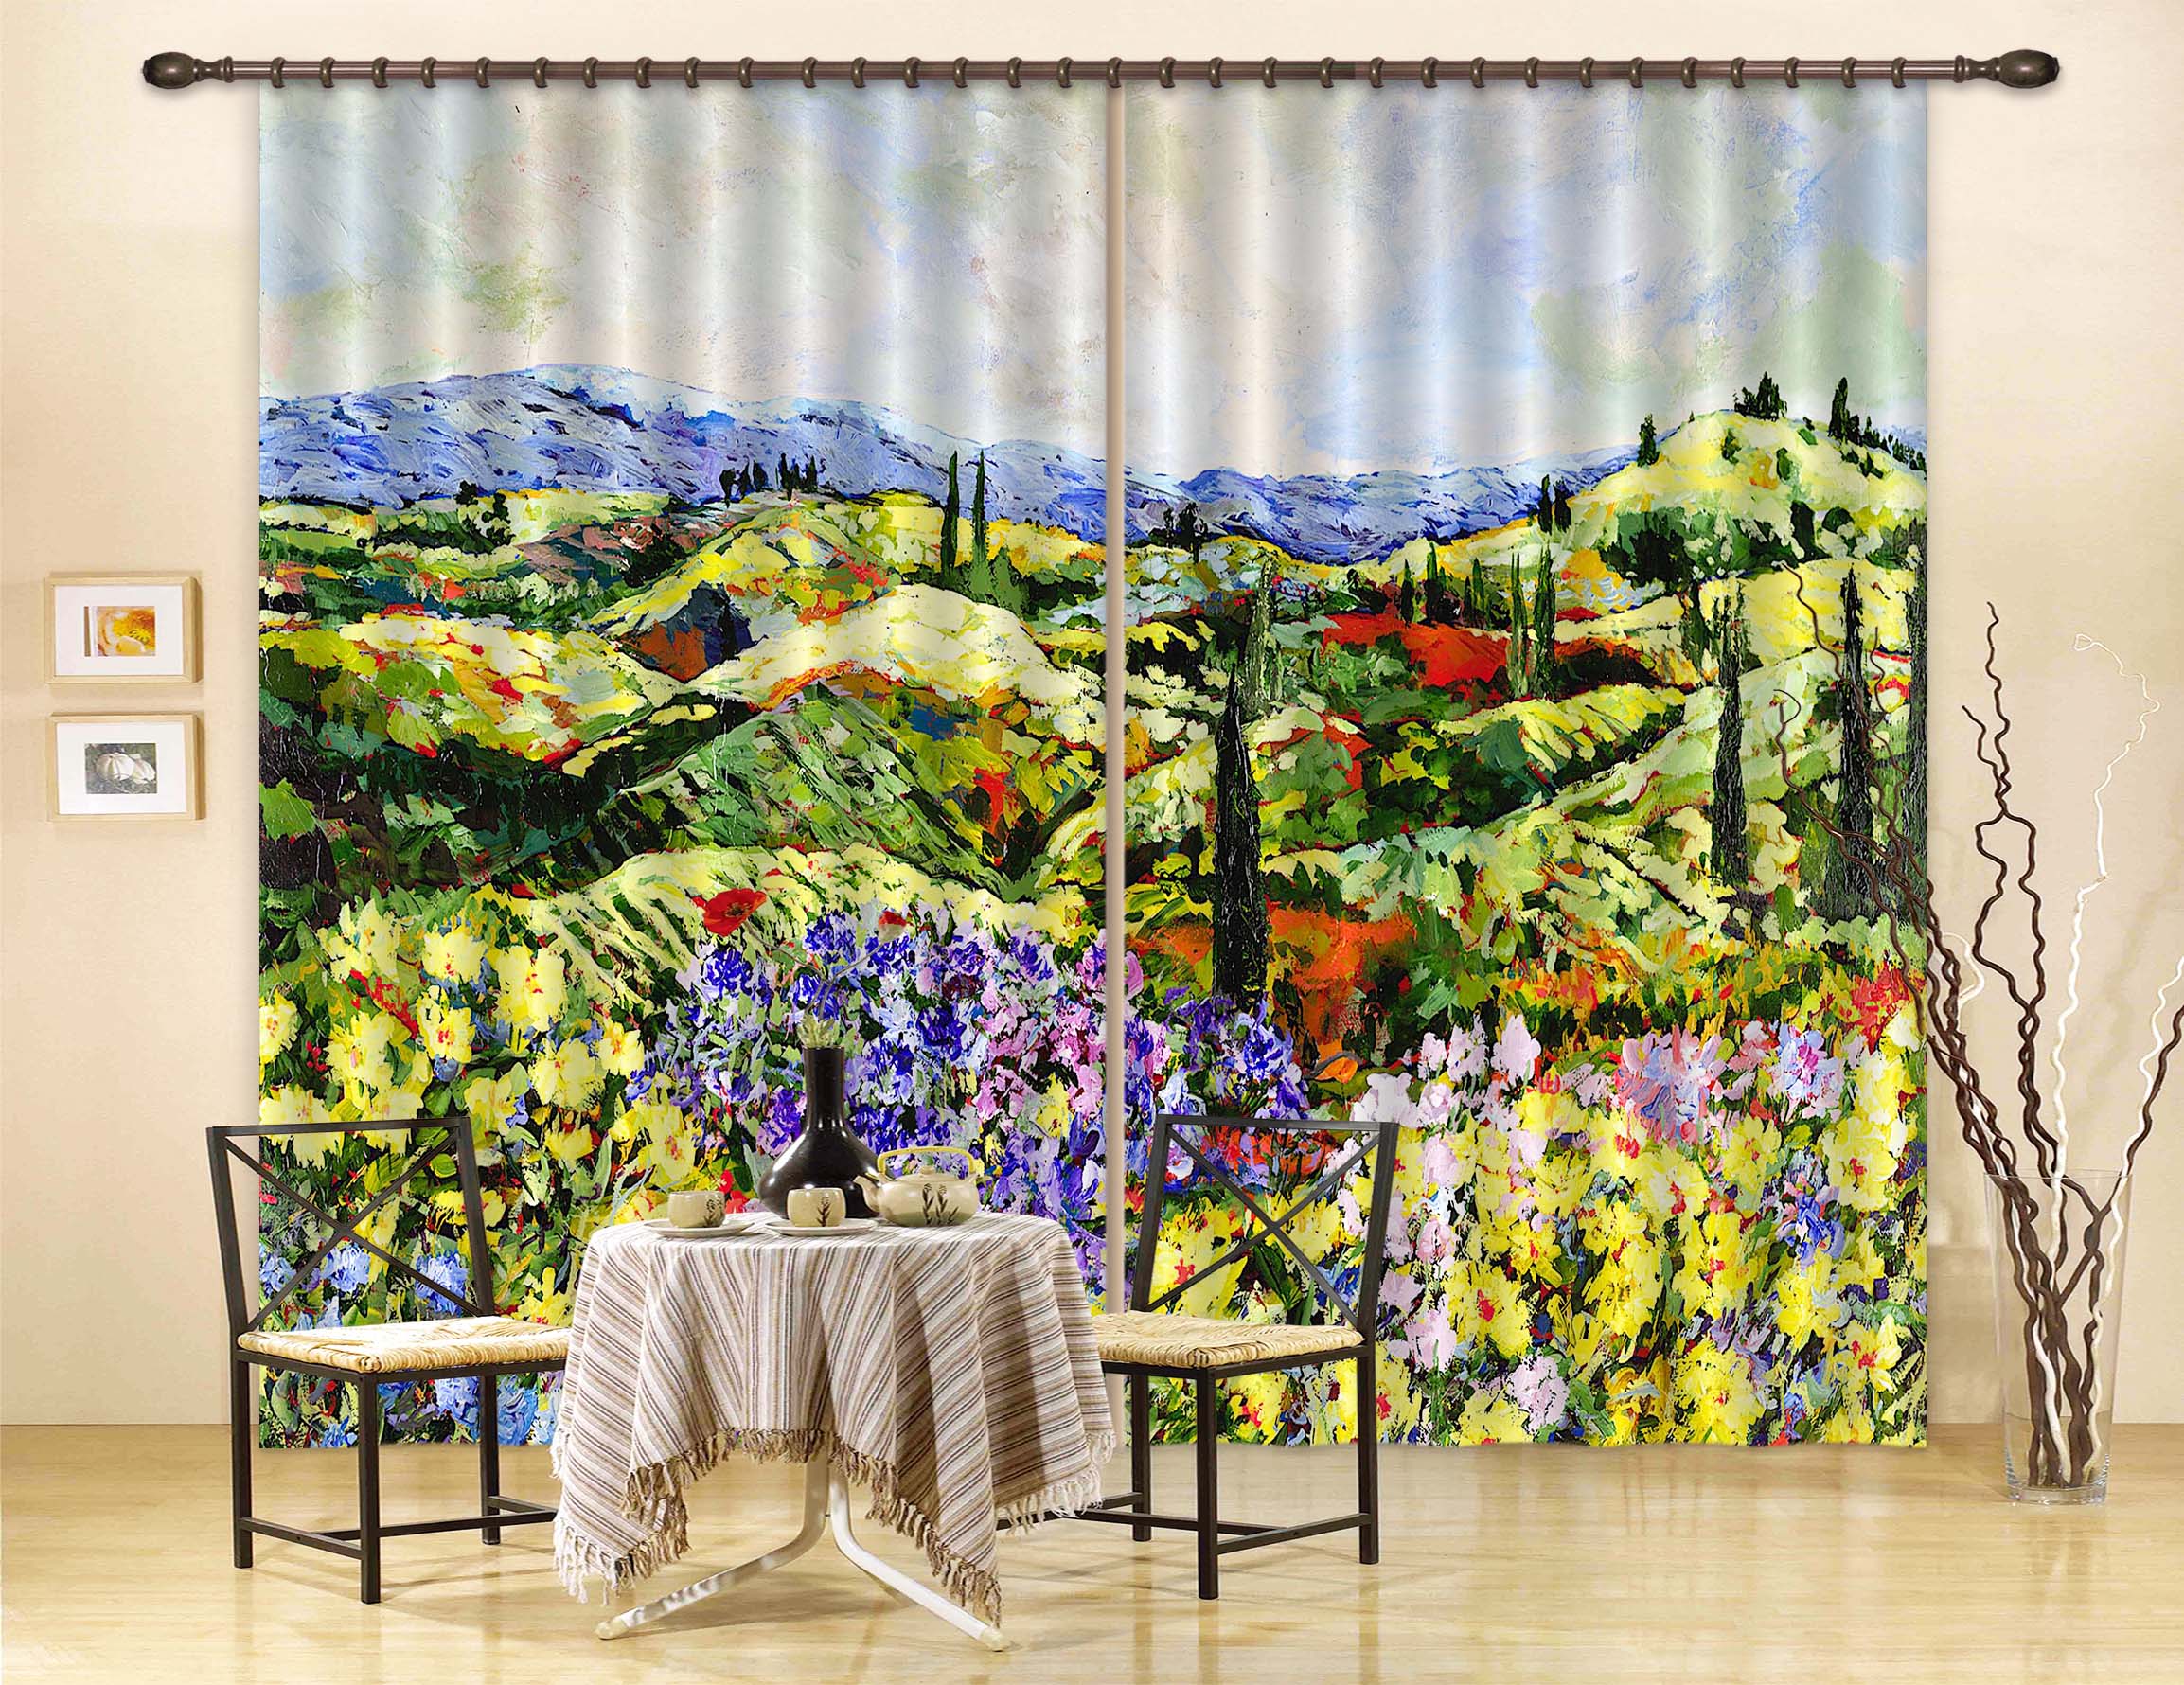 3D Dream Valley 041 Allan P. Friedlander Curtain Curtains Drapes